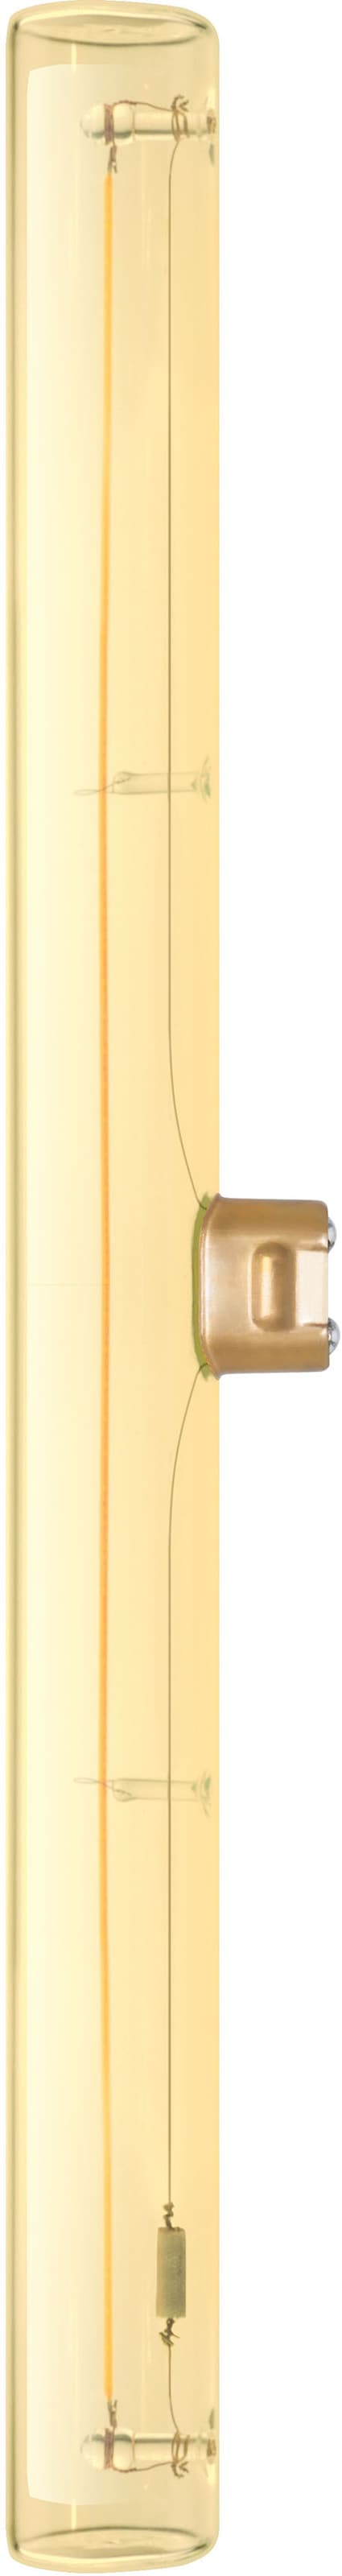 SEGULA LED-Leuchtmittel »LED Linienlampe S14d 300mm gold«, S14d, Warmweiß, dimmbar, Linienlampe S14d, 300mm gold